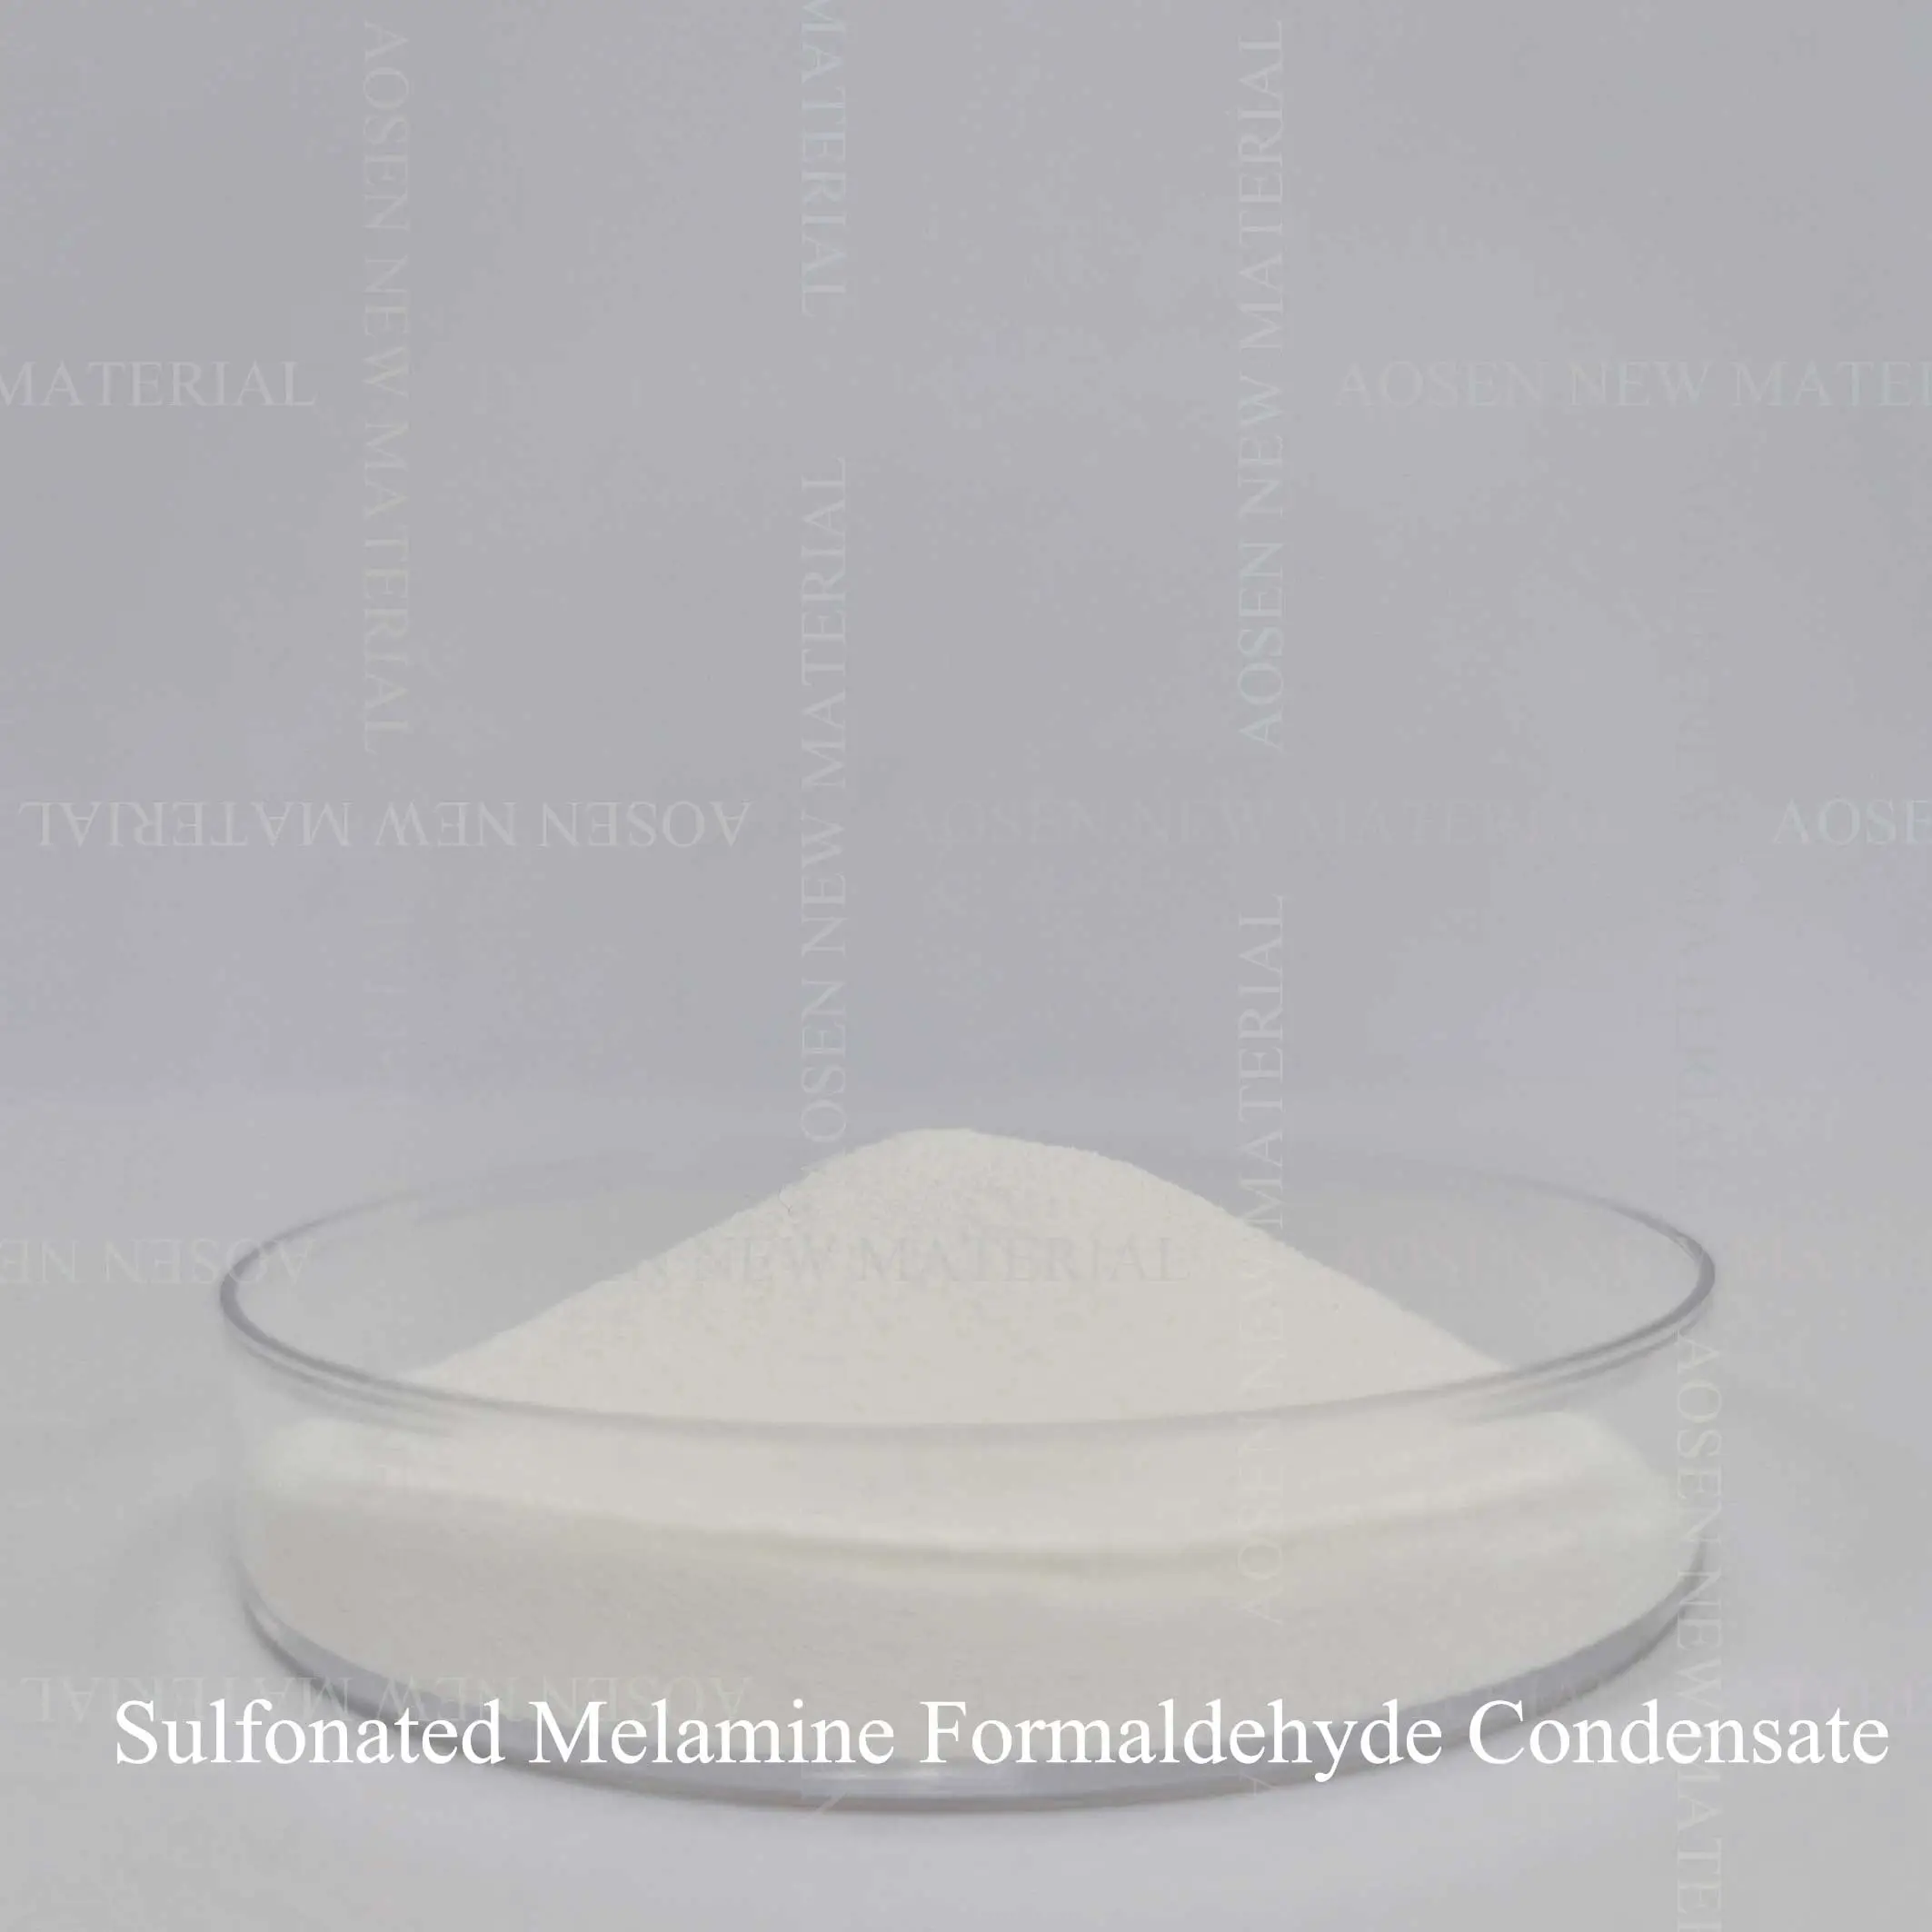 Condensat de formaldéhyde mélamine sulfonée